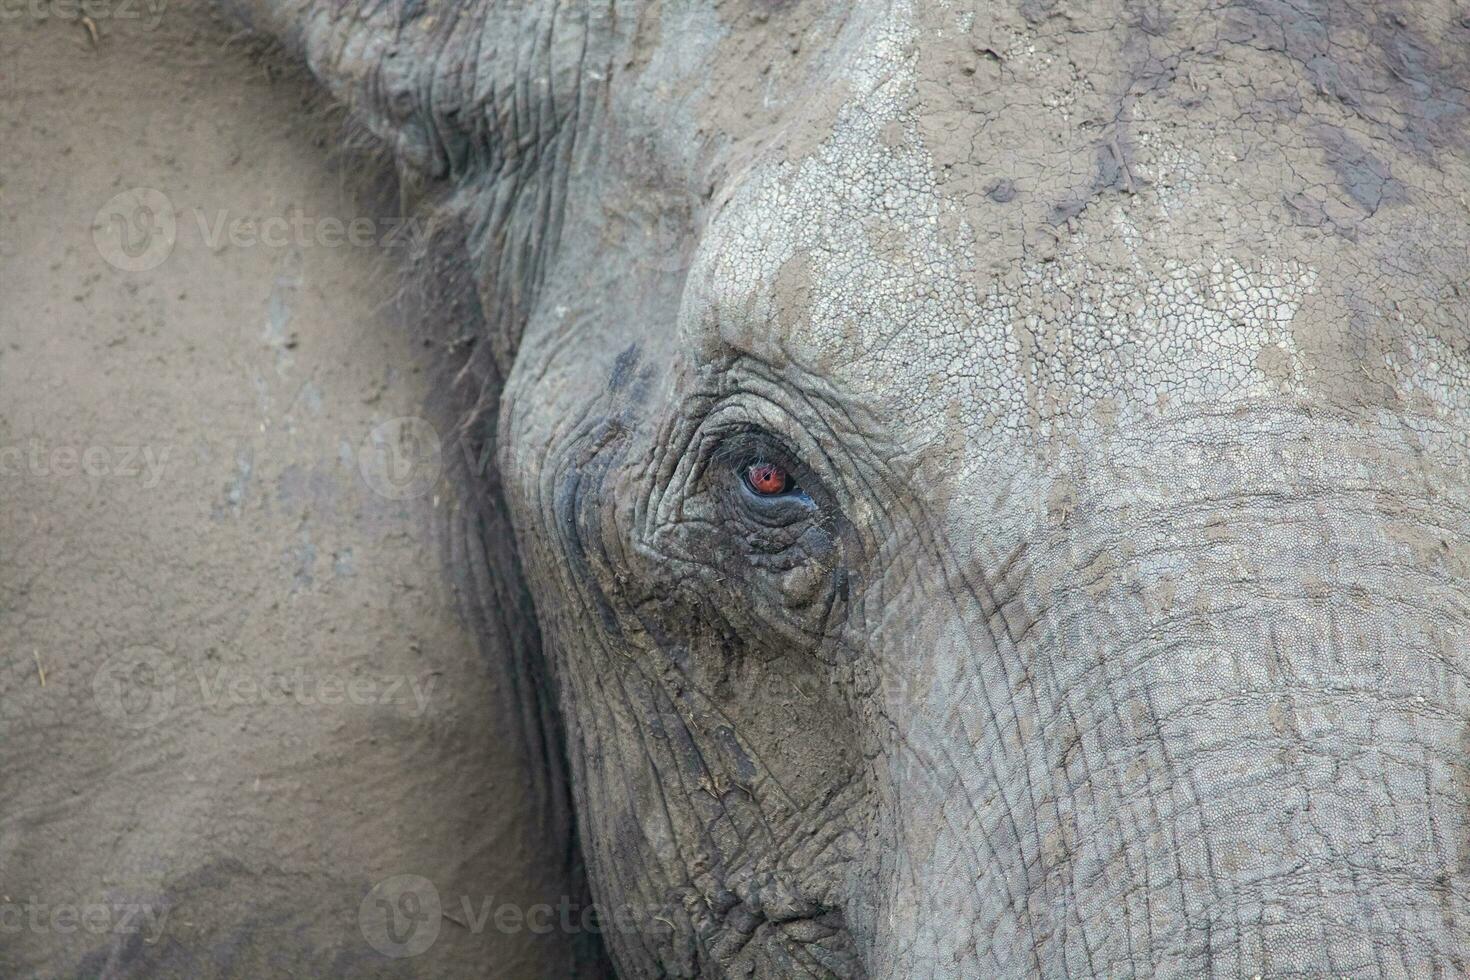 elefant på chobe nationell parkera, botswana foto